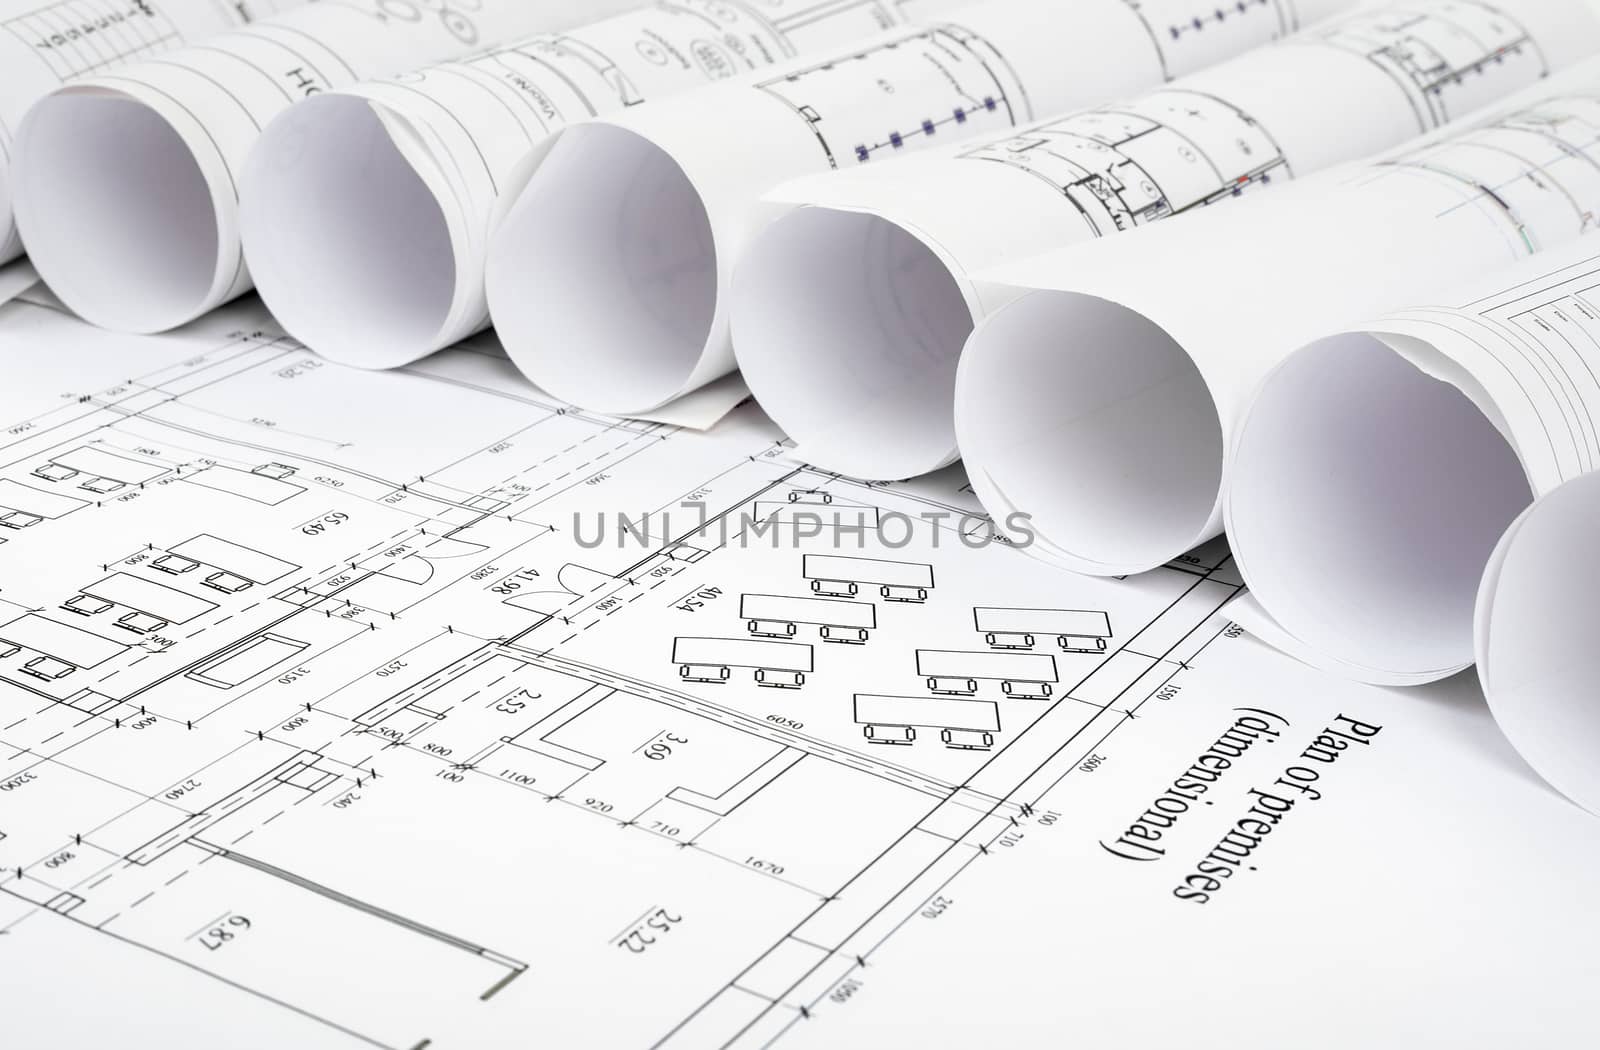 Blueprints and rolls of blueprints, side view. Building concept